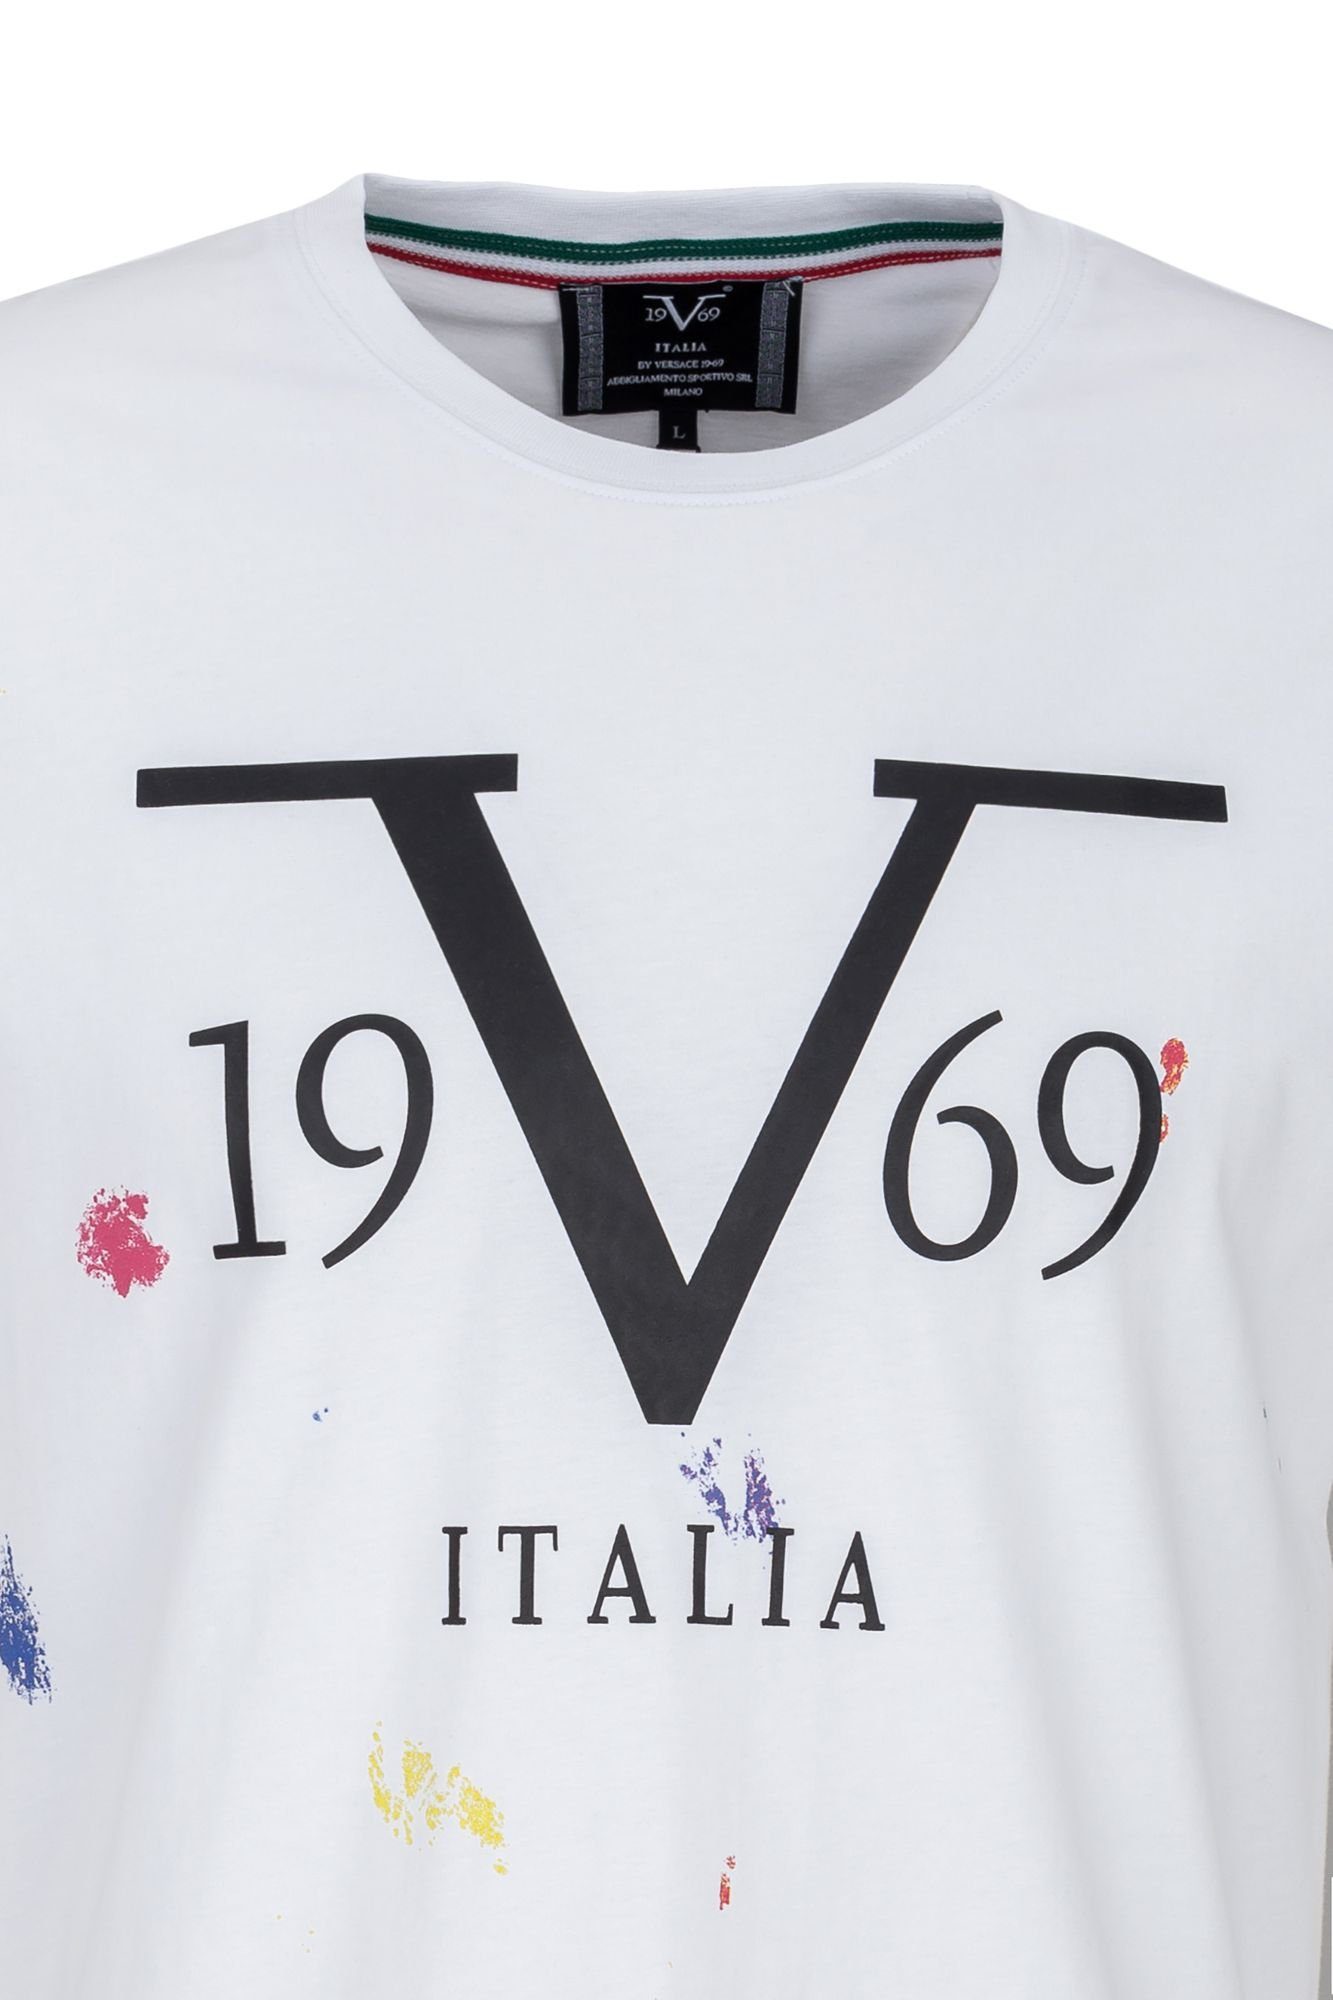 19V69 Italia by by Versace - Rundhalsshirt SRL Versace Sportivo Leonardo